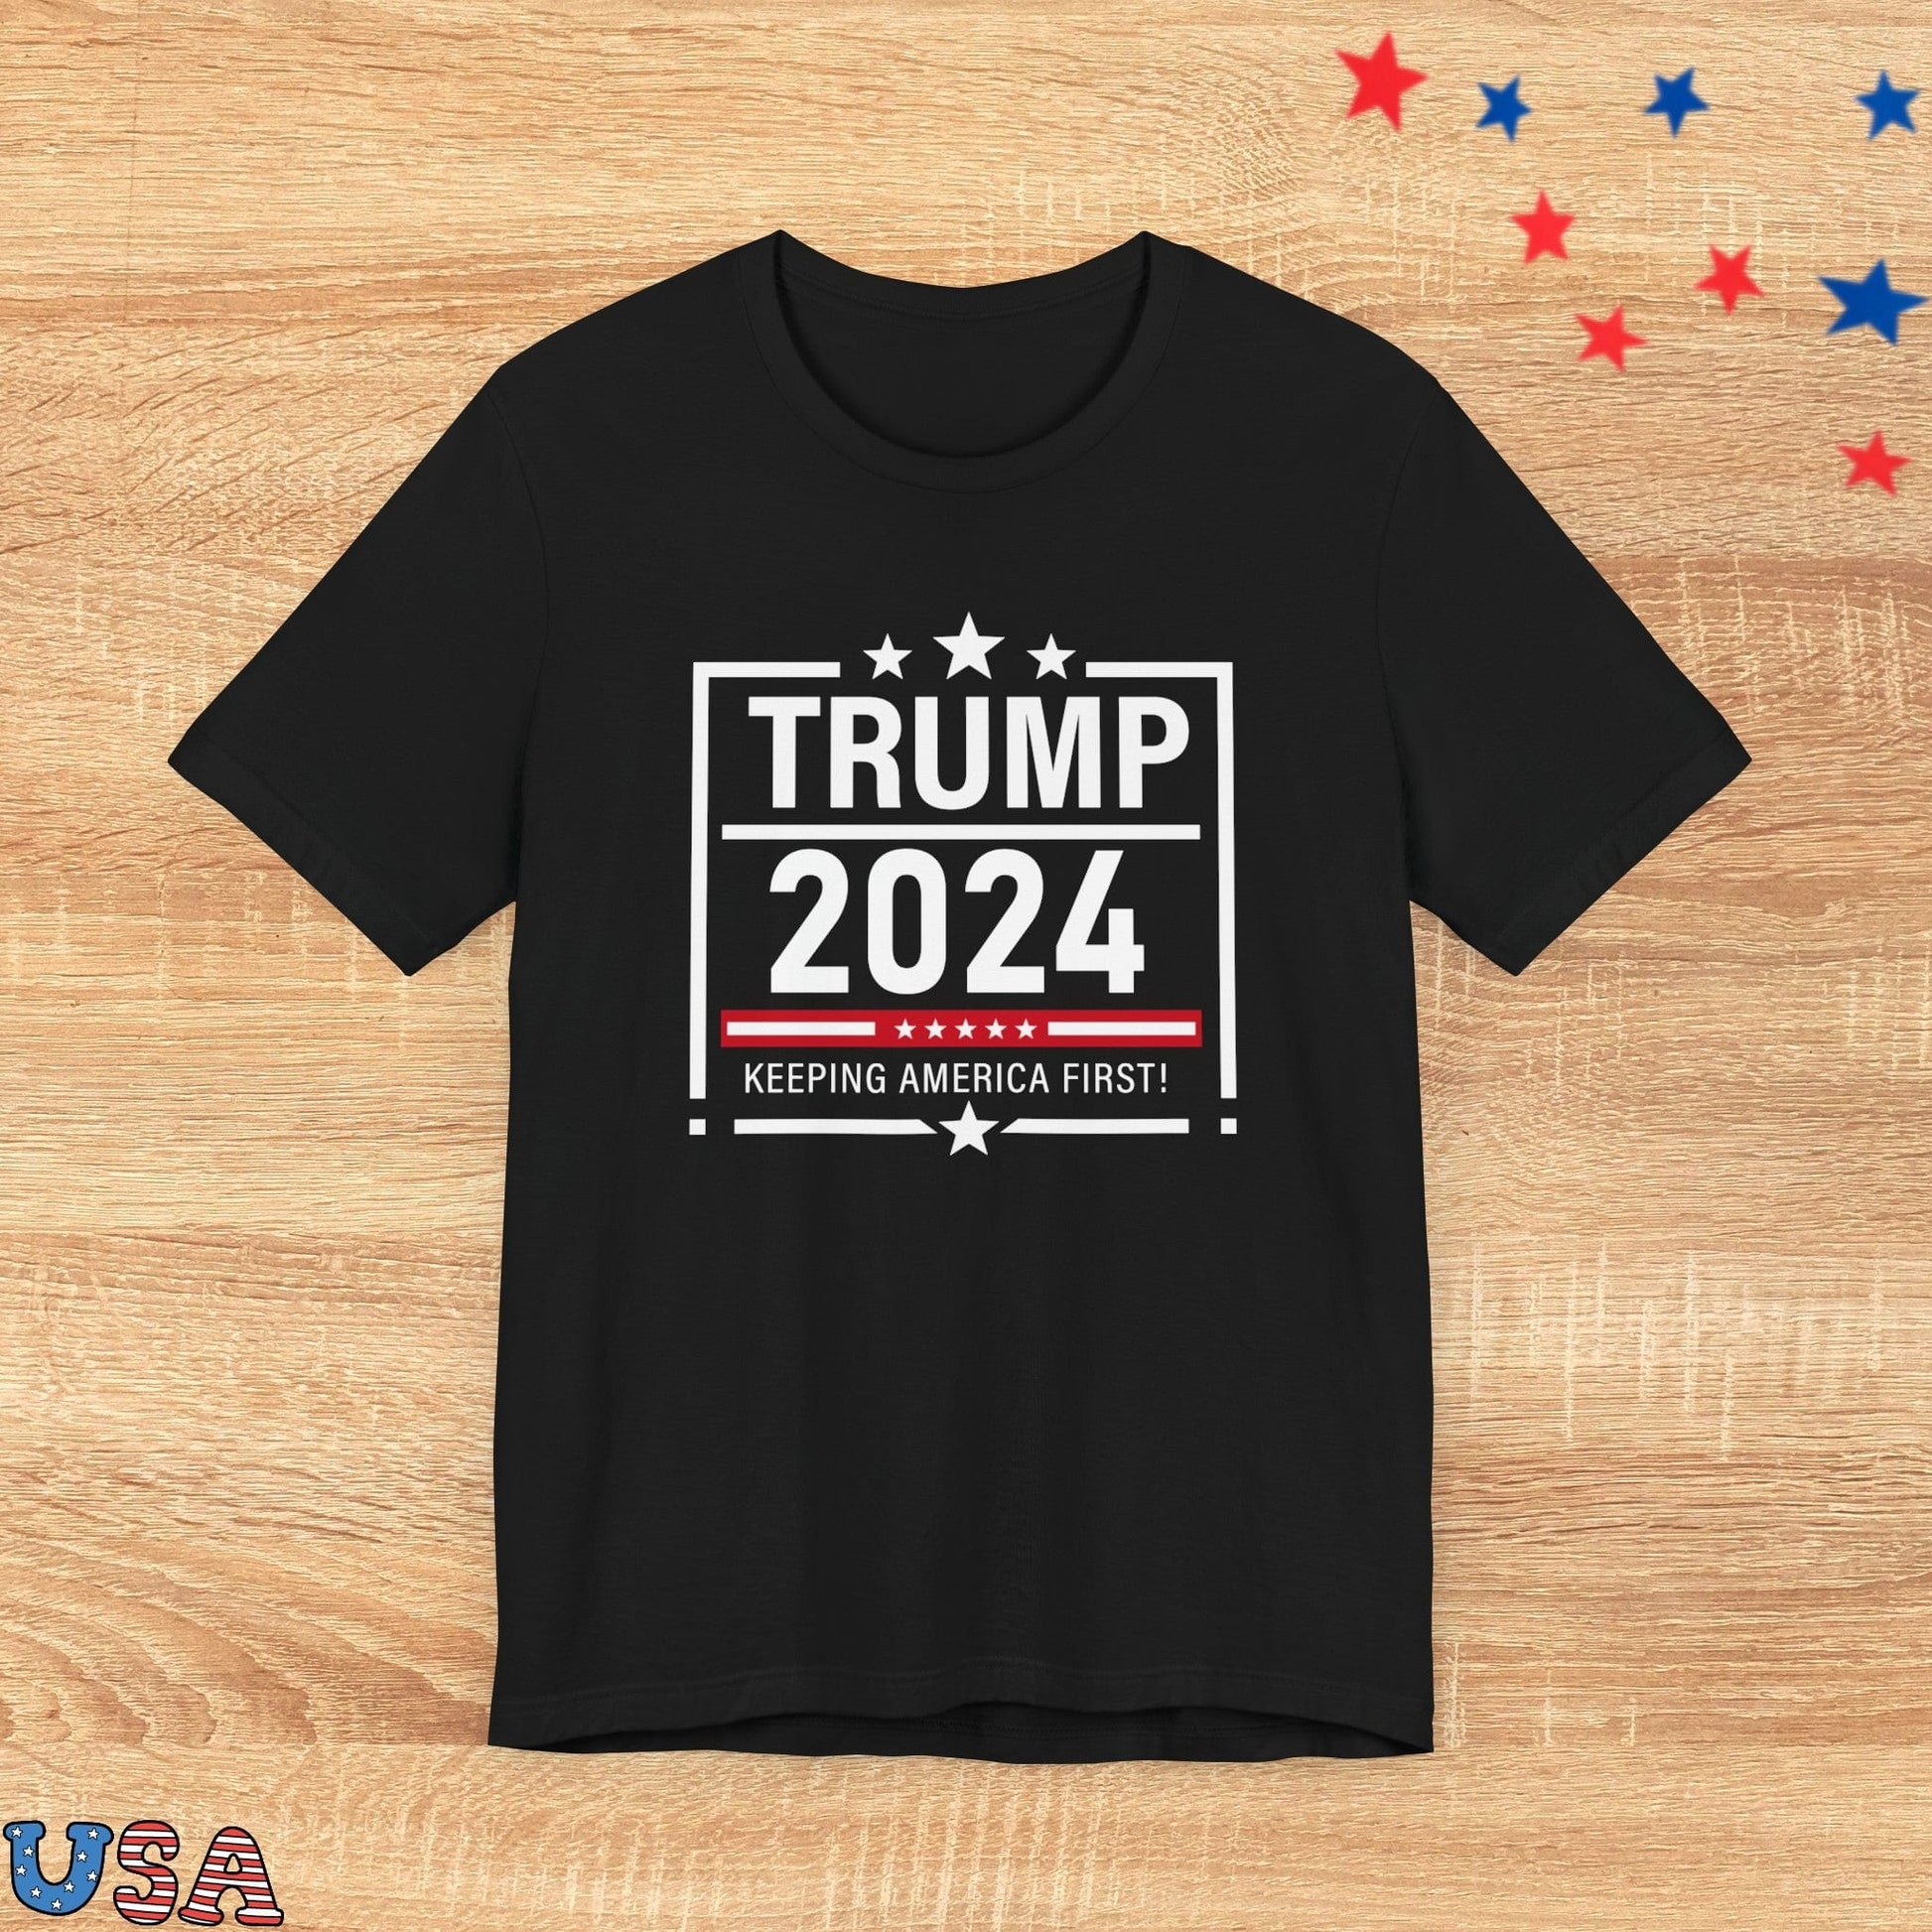 patriotic stars T-Shirt Black / XS Keeping America First!